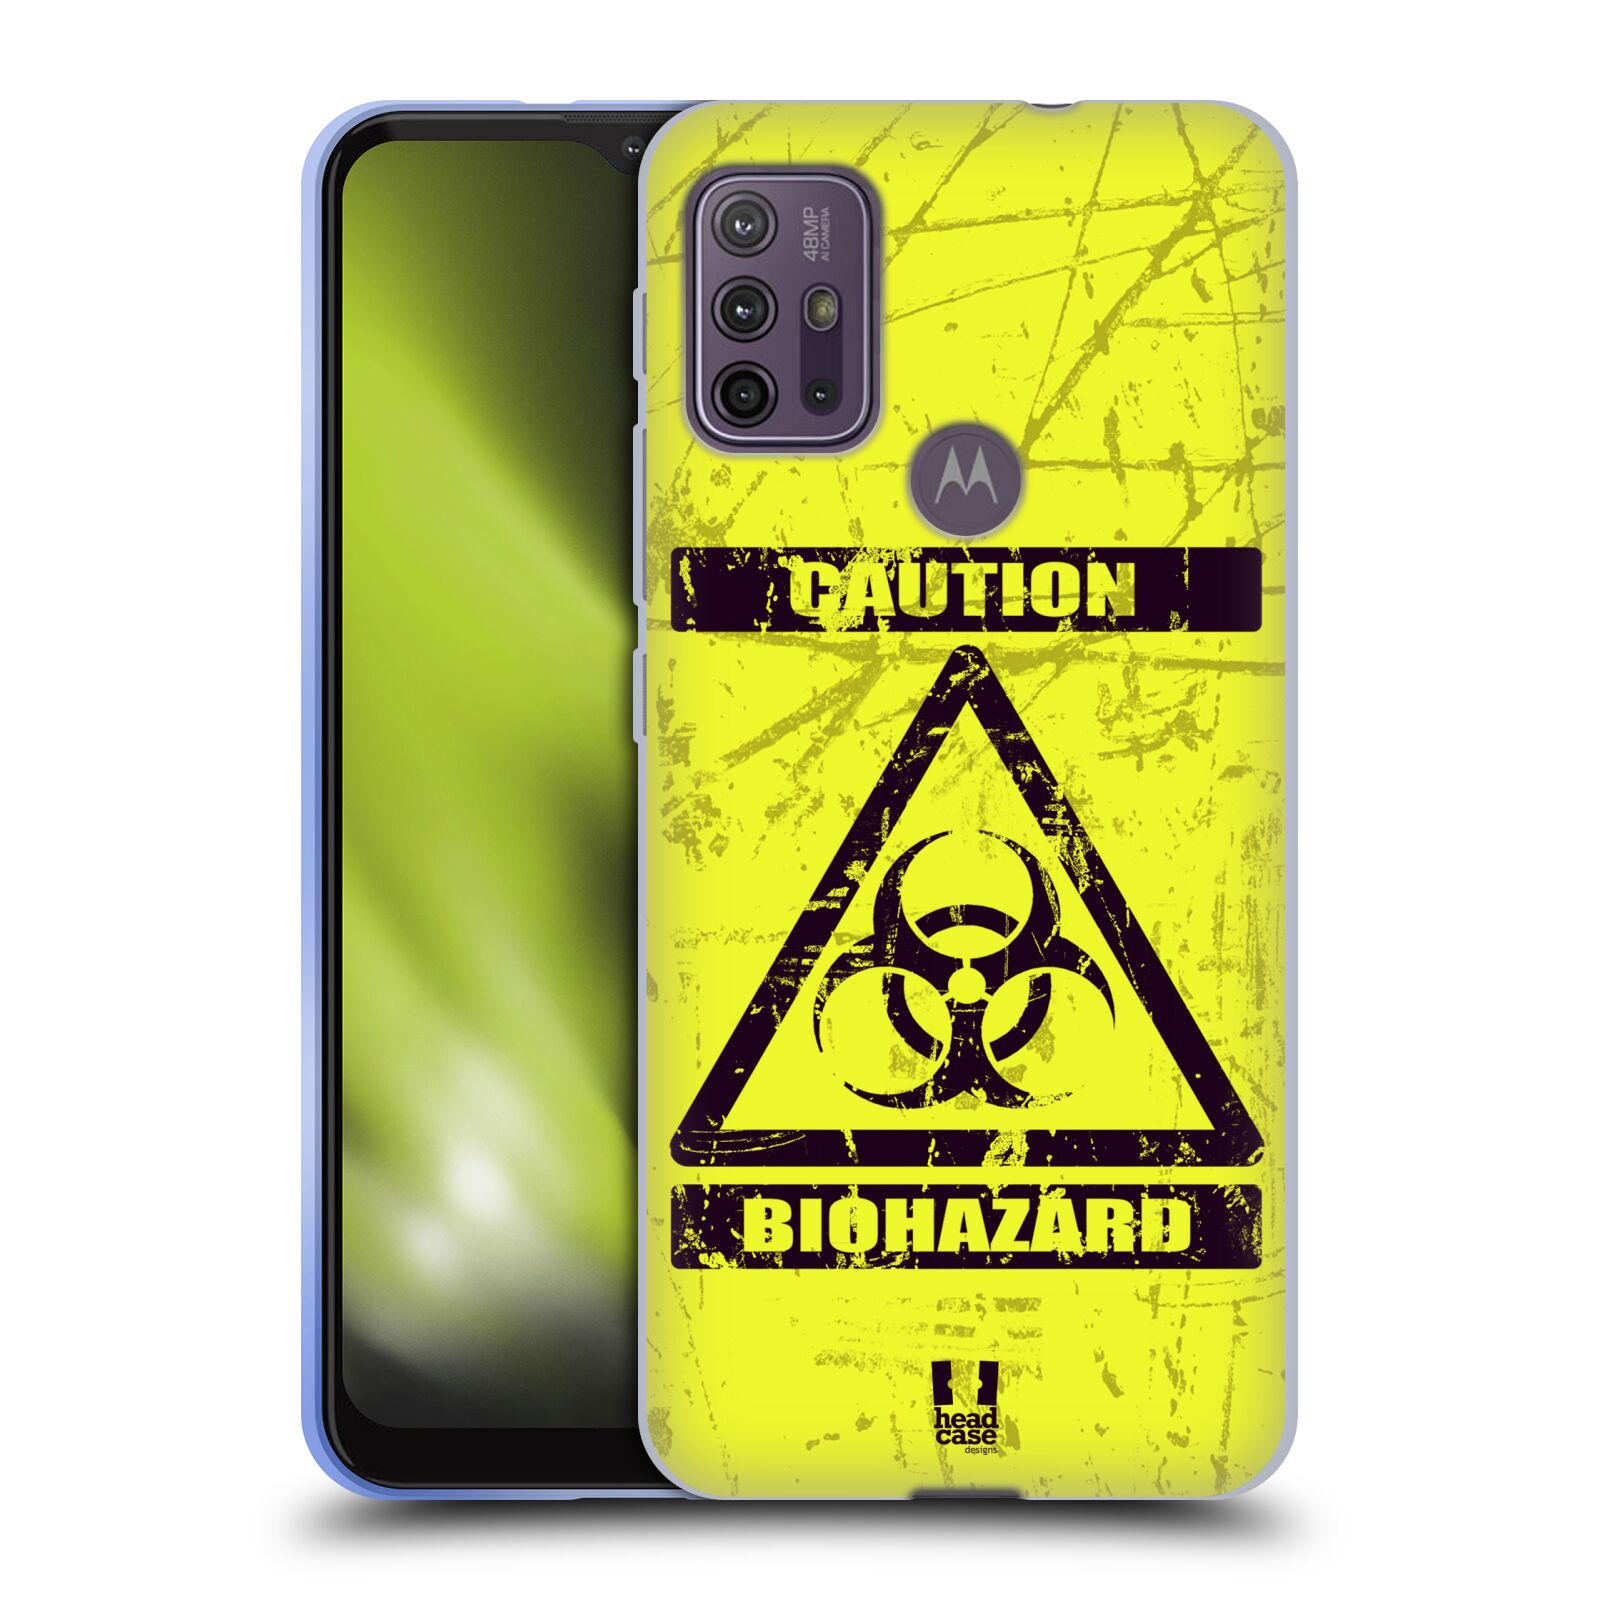 Silikonové pouzdro na mobil Motorola Moto G10 / G30 - Head Case - BIOHAZARD